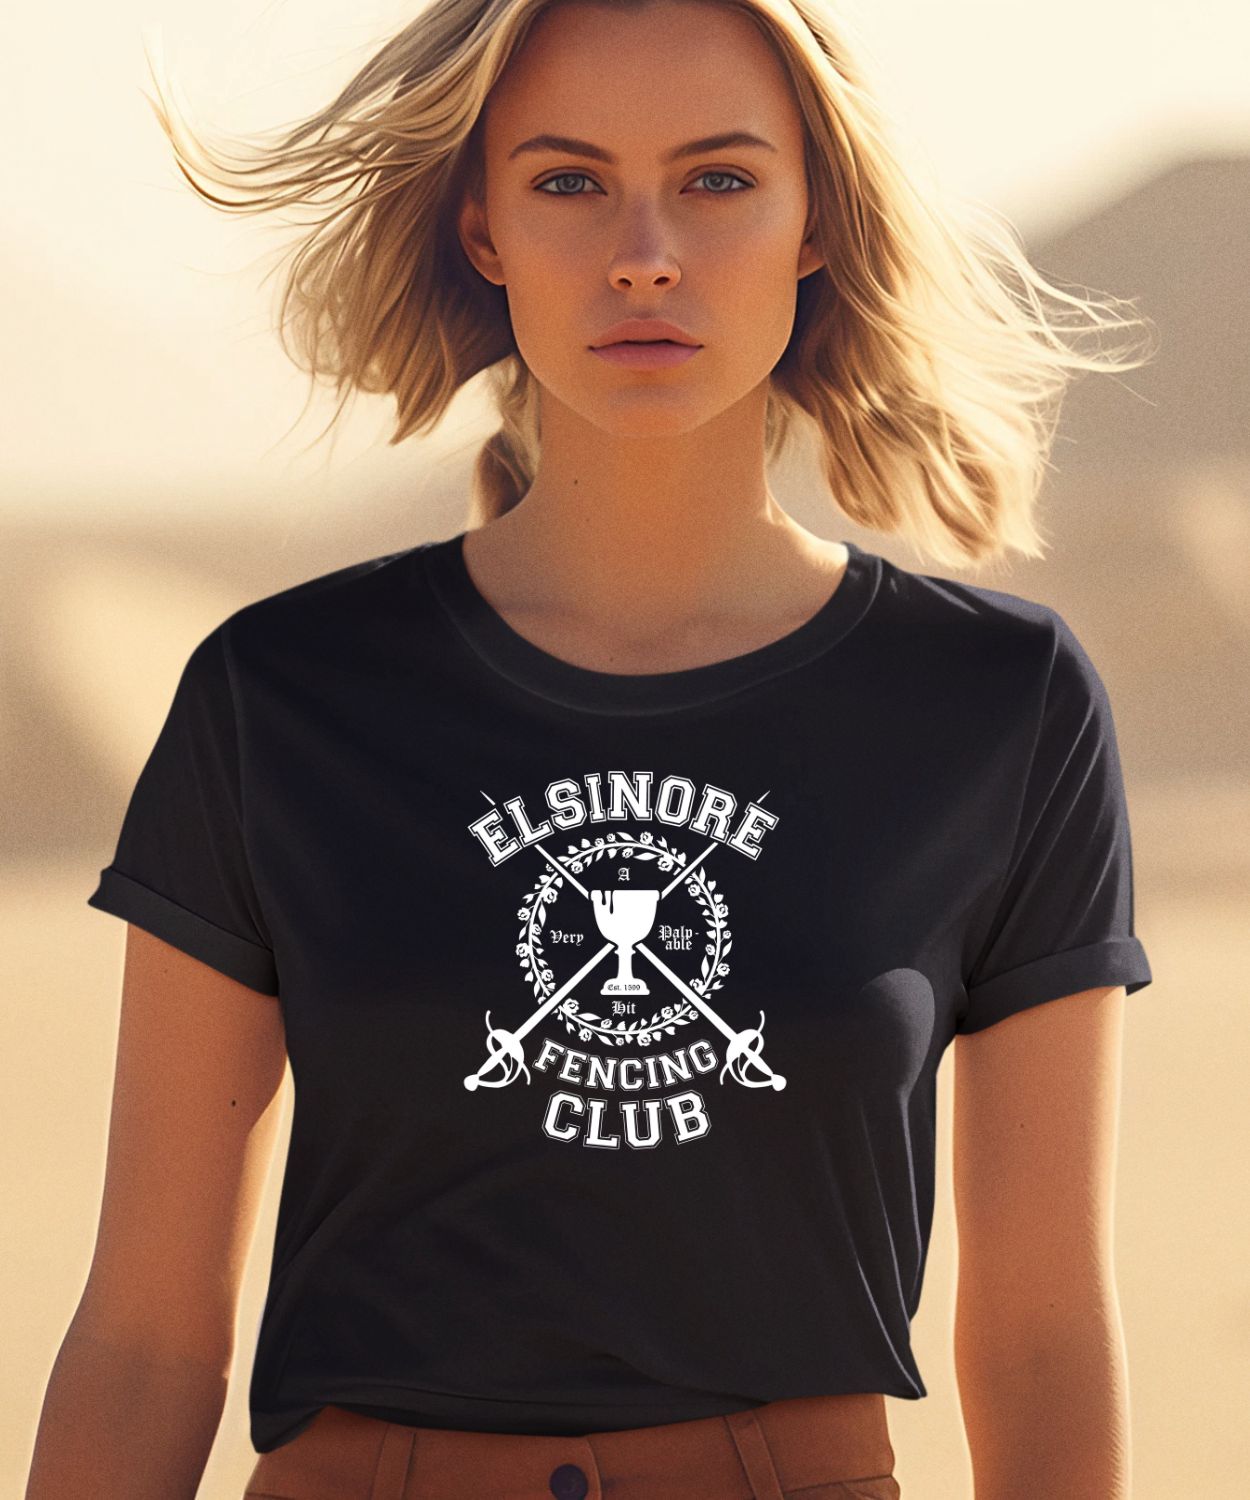 Andrew Scott Wearing Elsinore Fencing Club Shirt